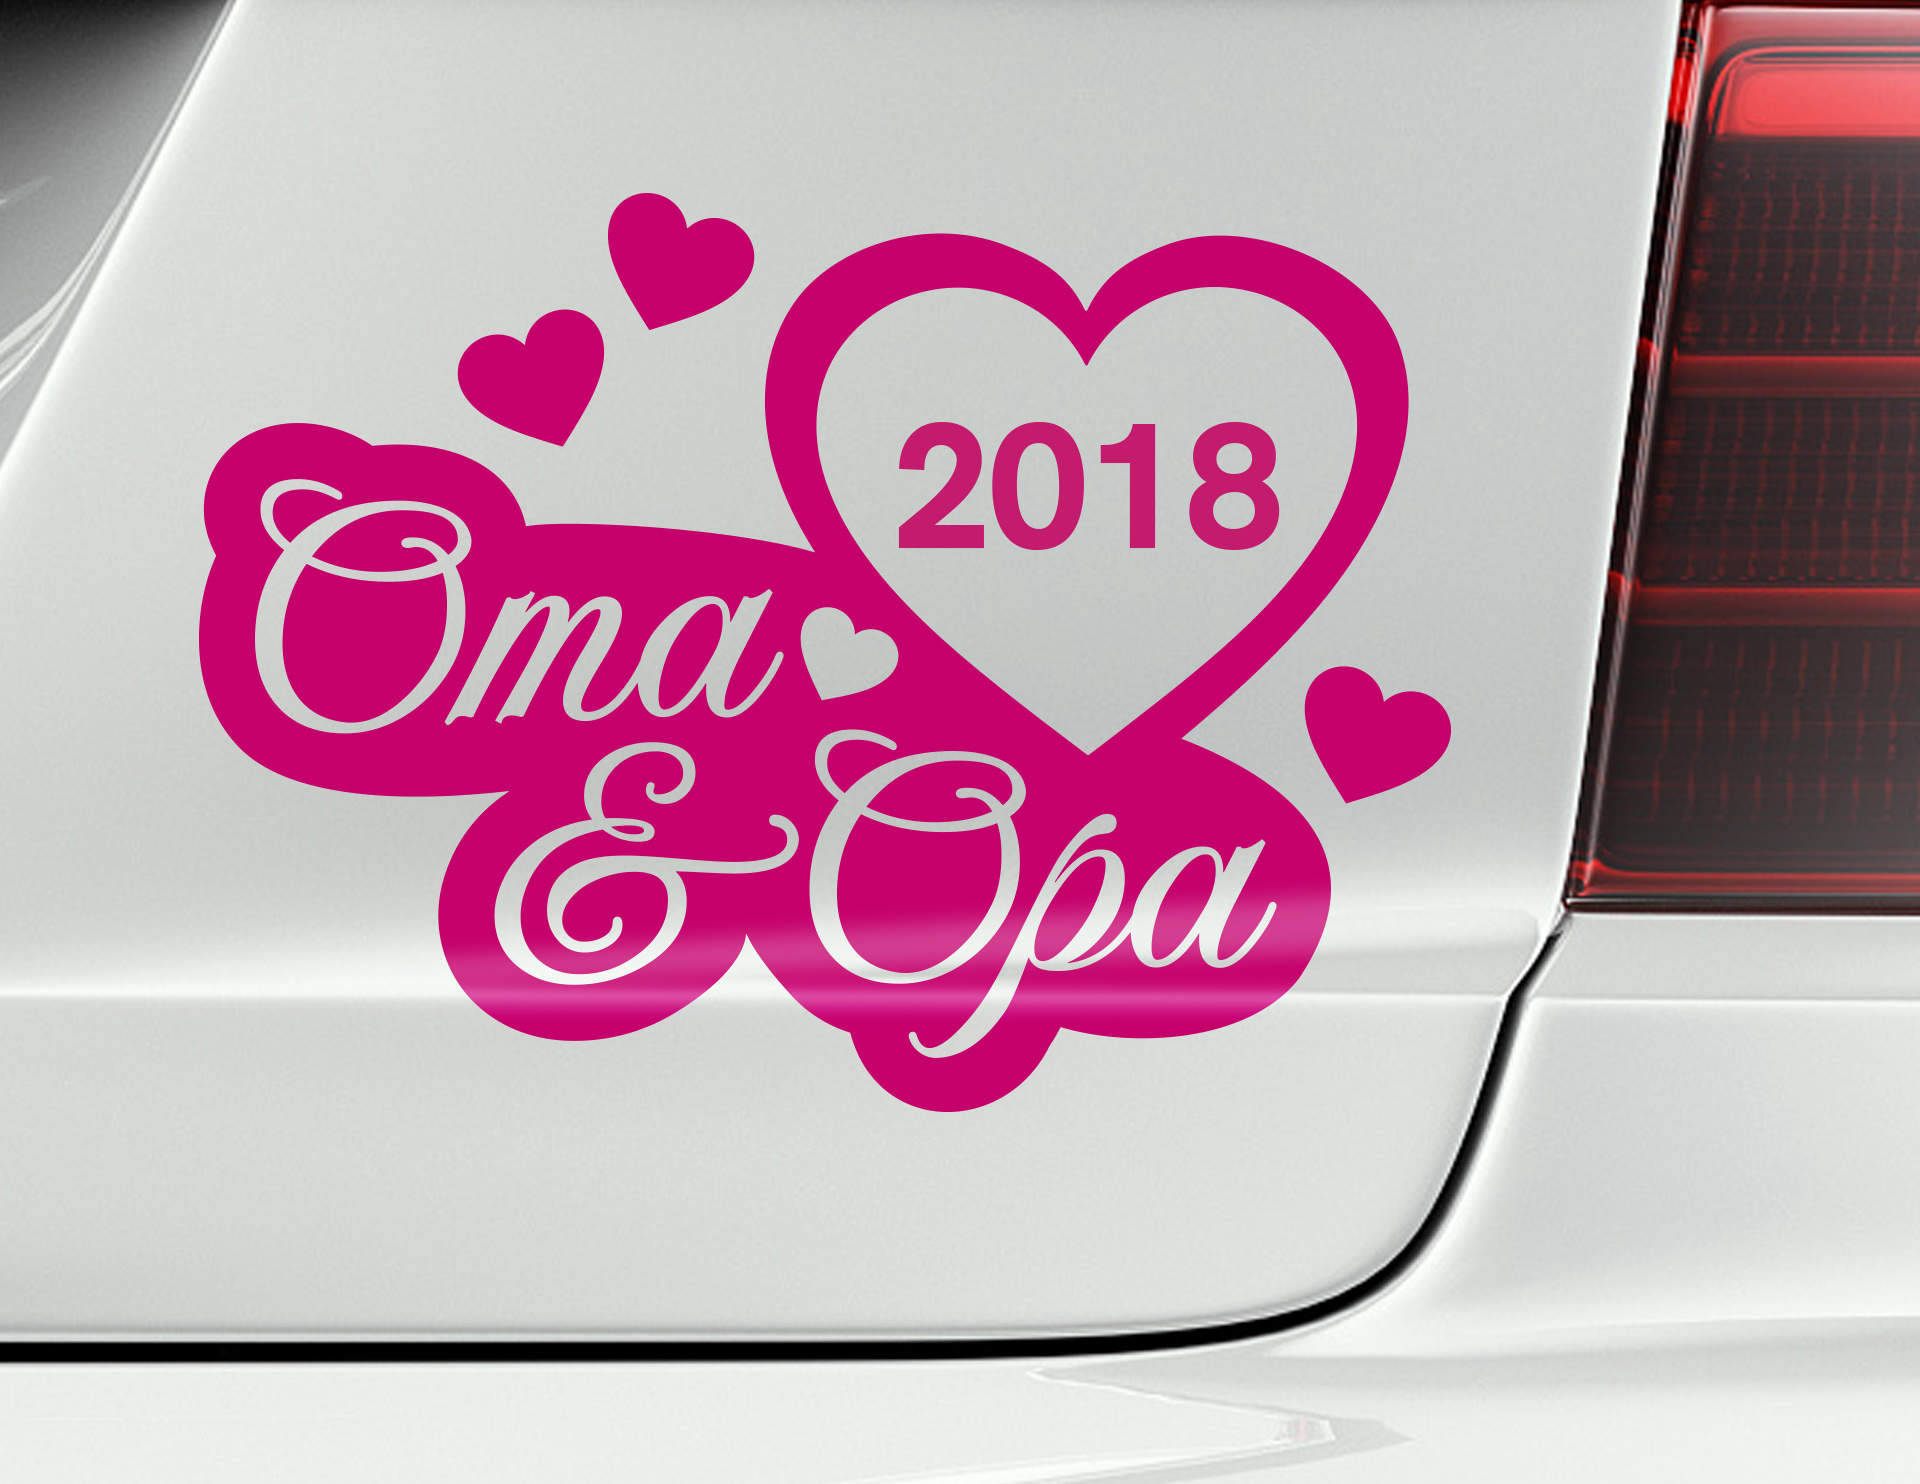 Autoaufkleber Oma & Opa on Tour mit Wunsch-Jahr